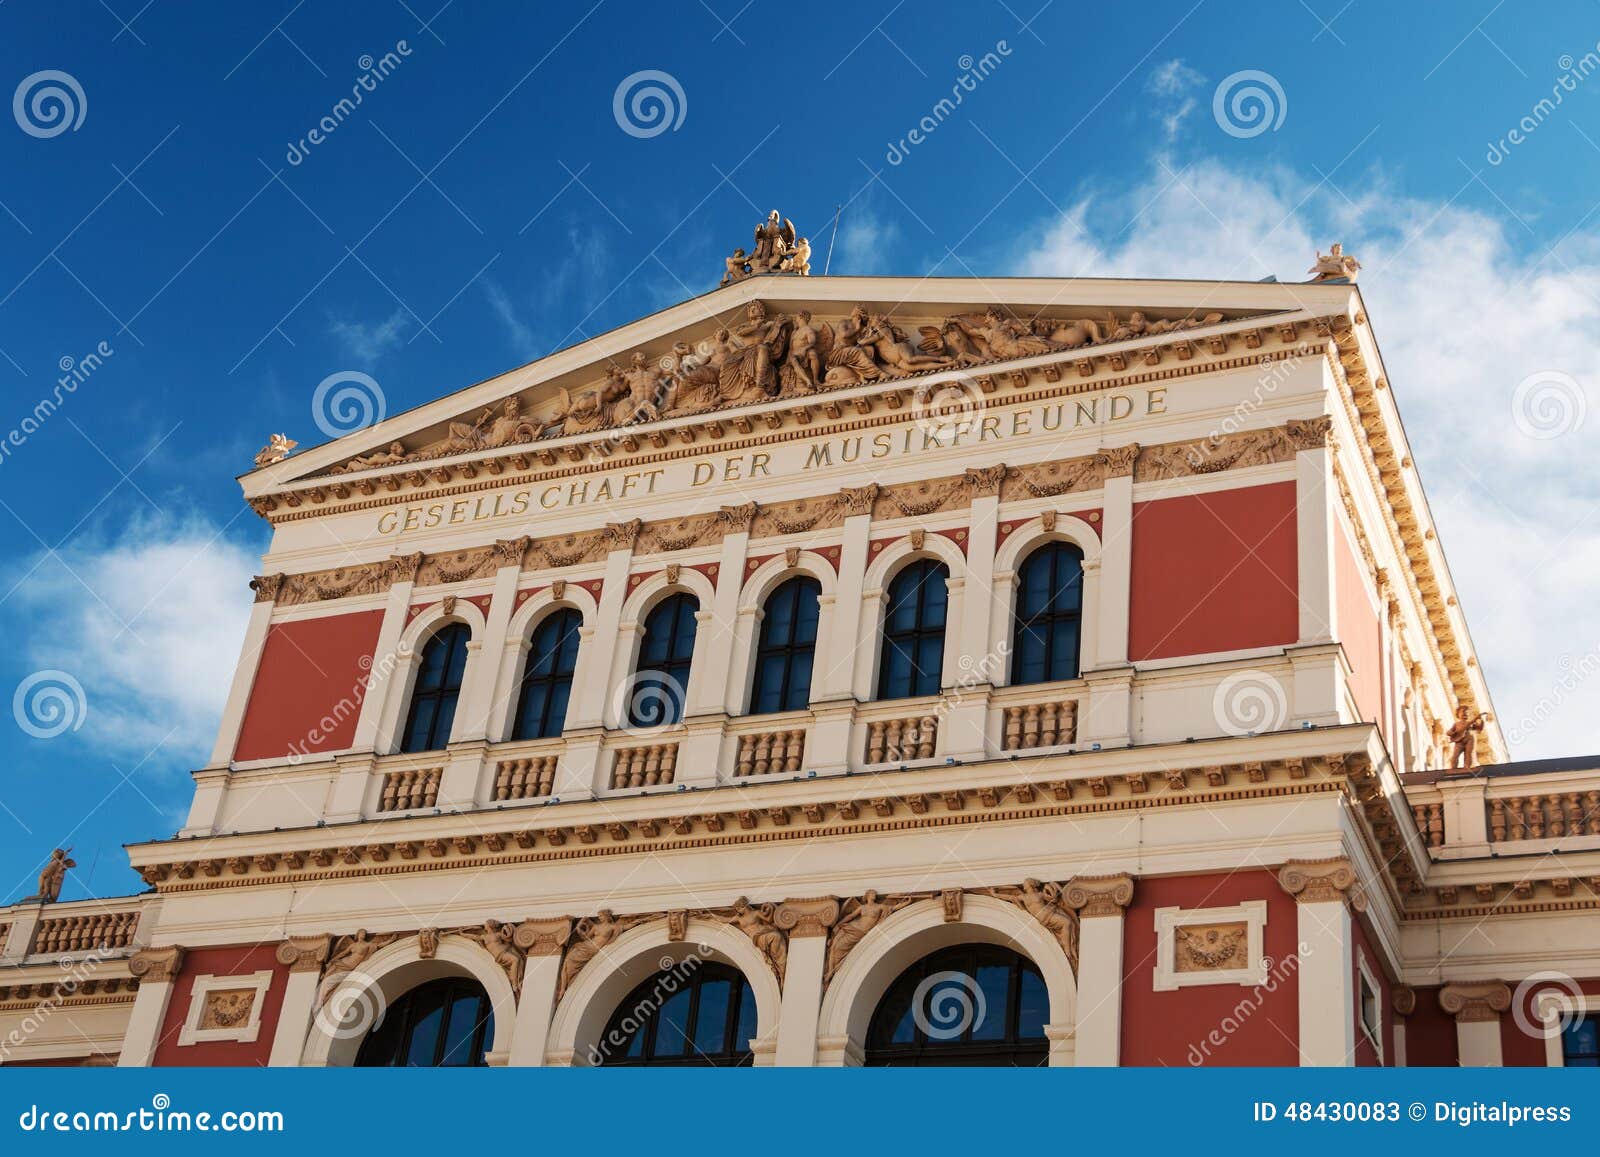 Musikverein Vienna, historic concert hall where the vienna philharmonic play the Vienna New Year s Concert